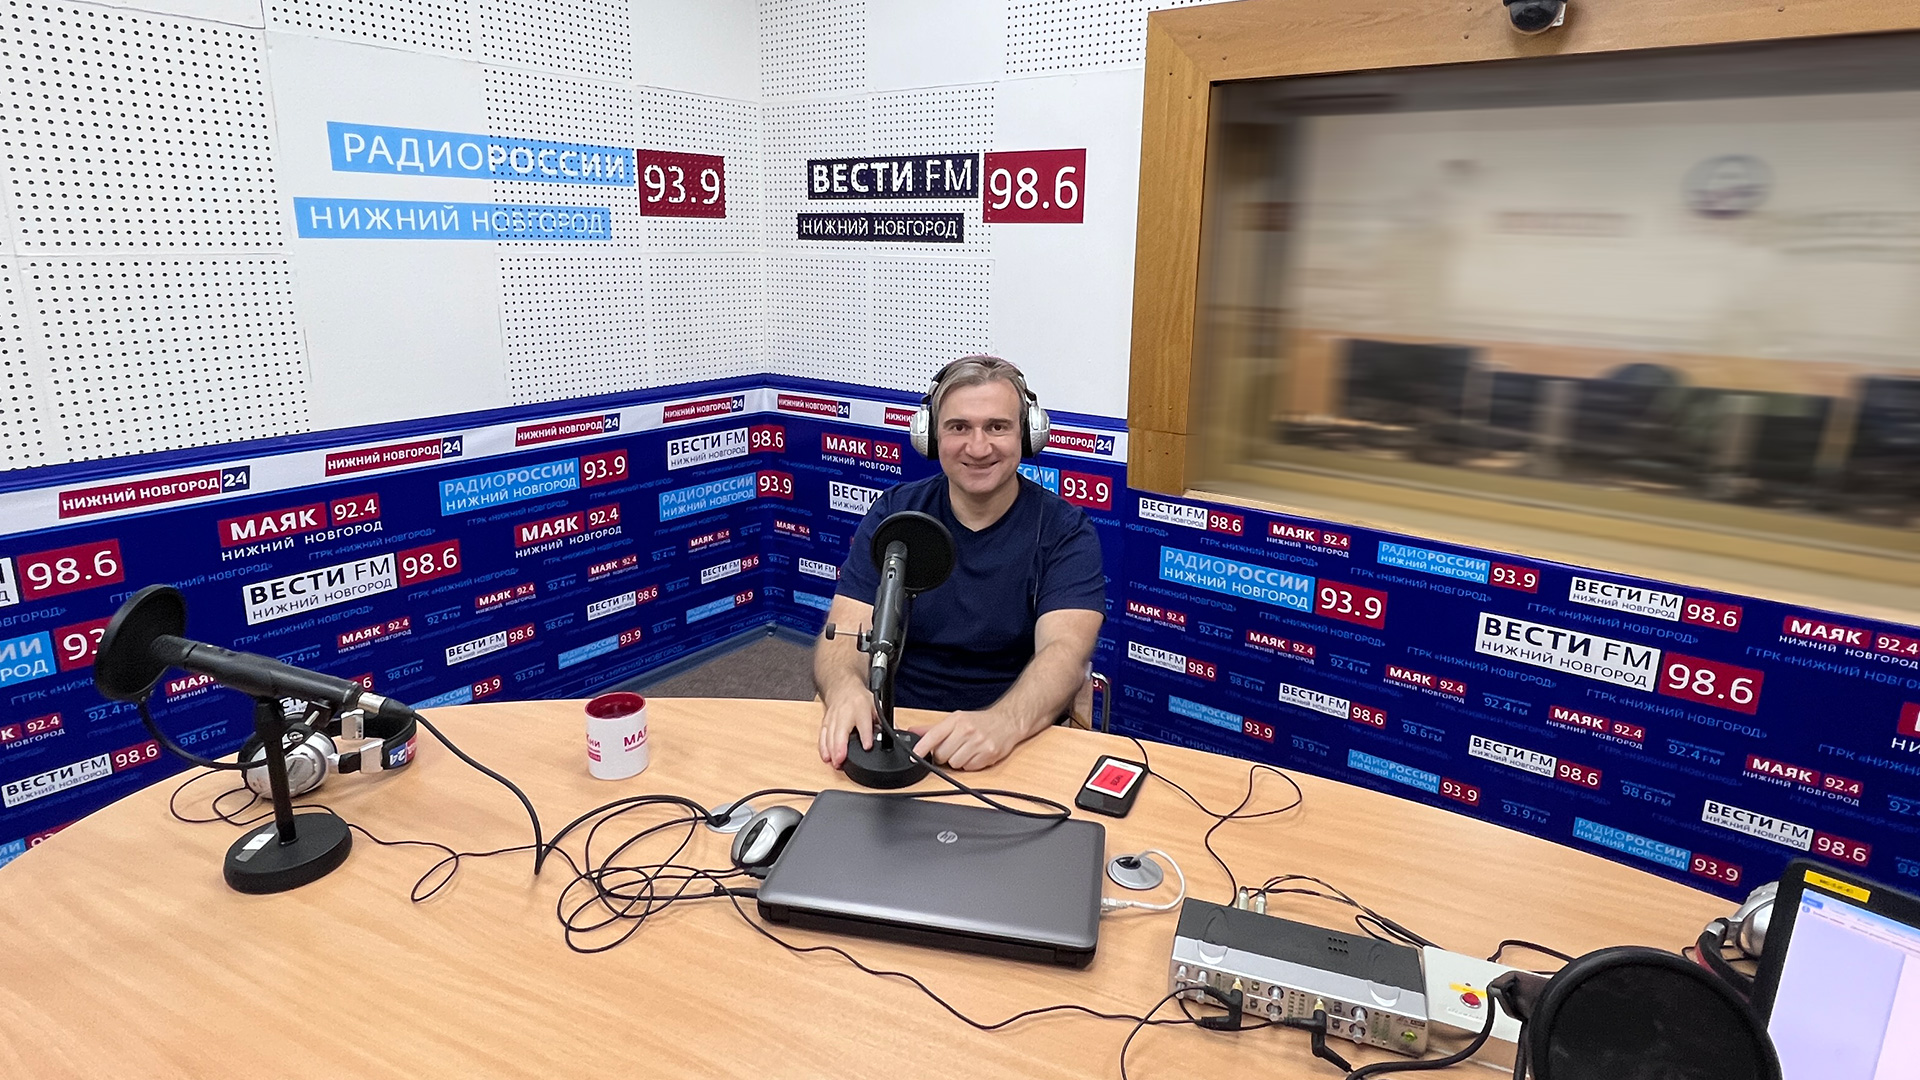 Alexander Kharlamov – on Vesti FM radio